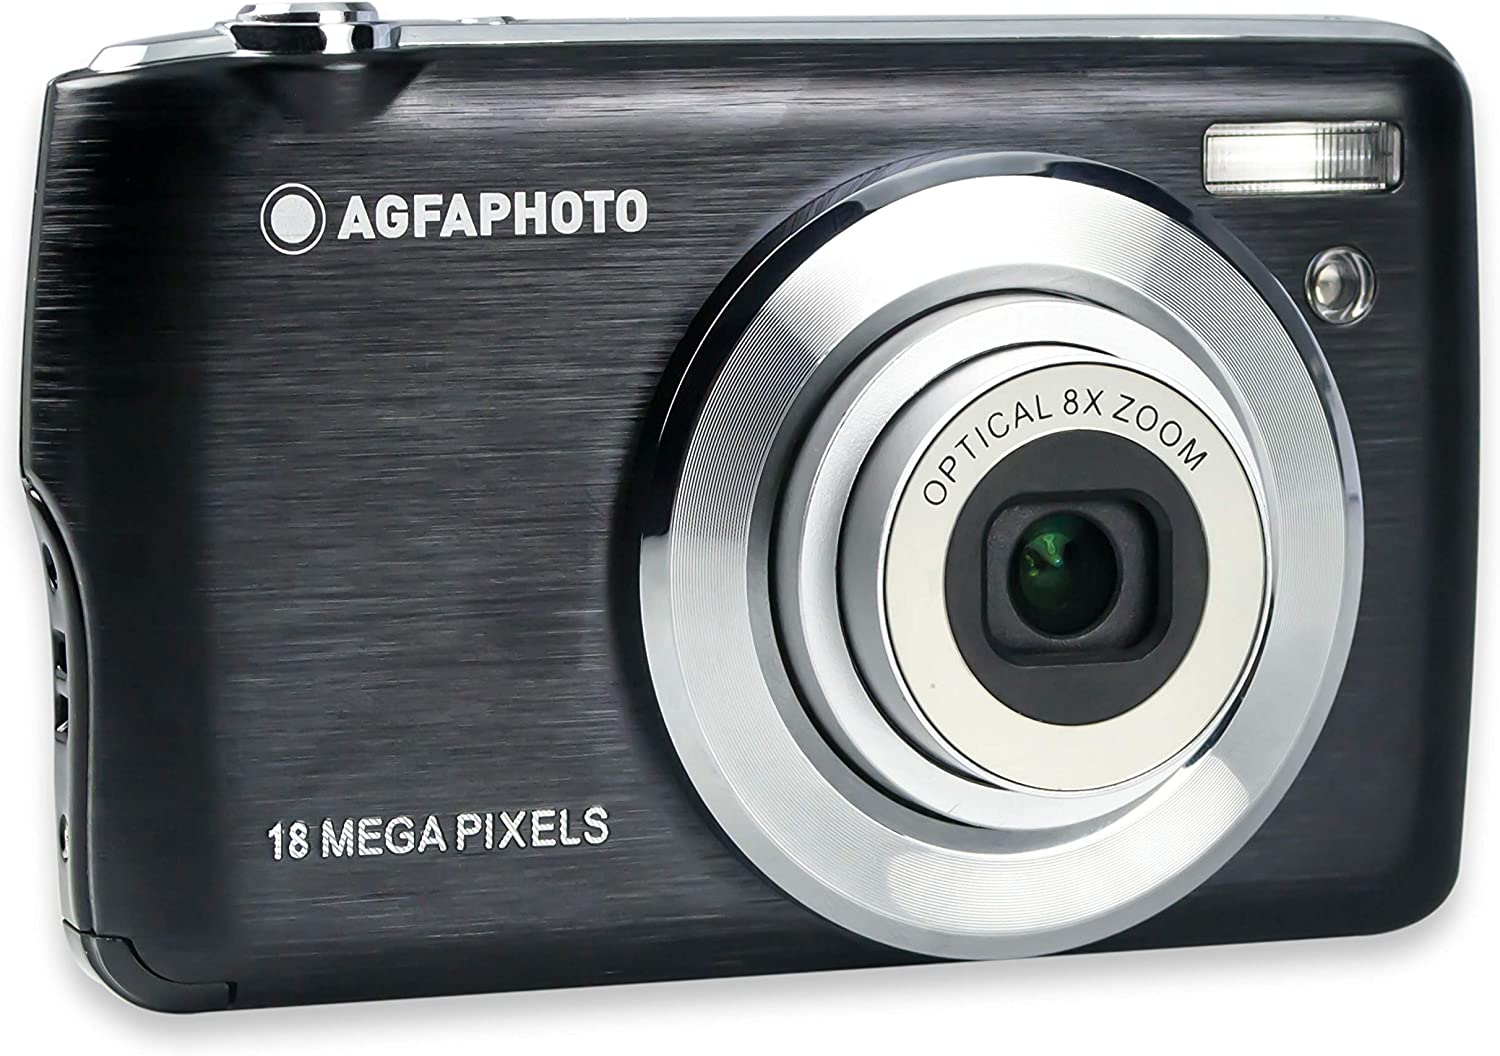 Product Image of Agfa Photo Realishot DC8200 Compact Digital Camera (CLEARANCE2067)